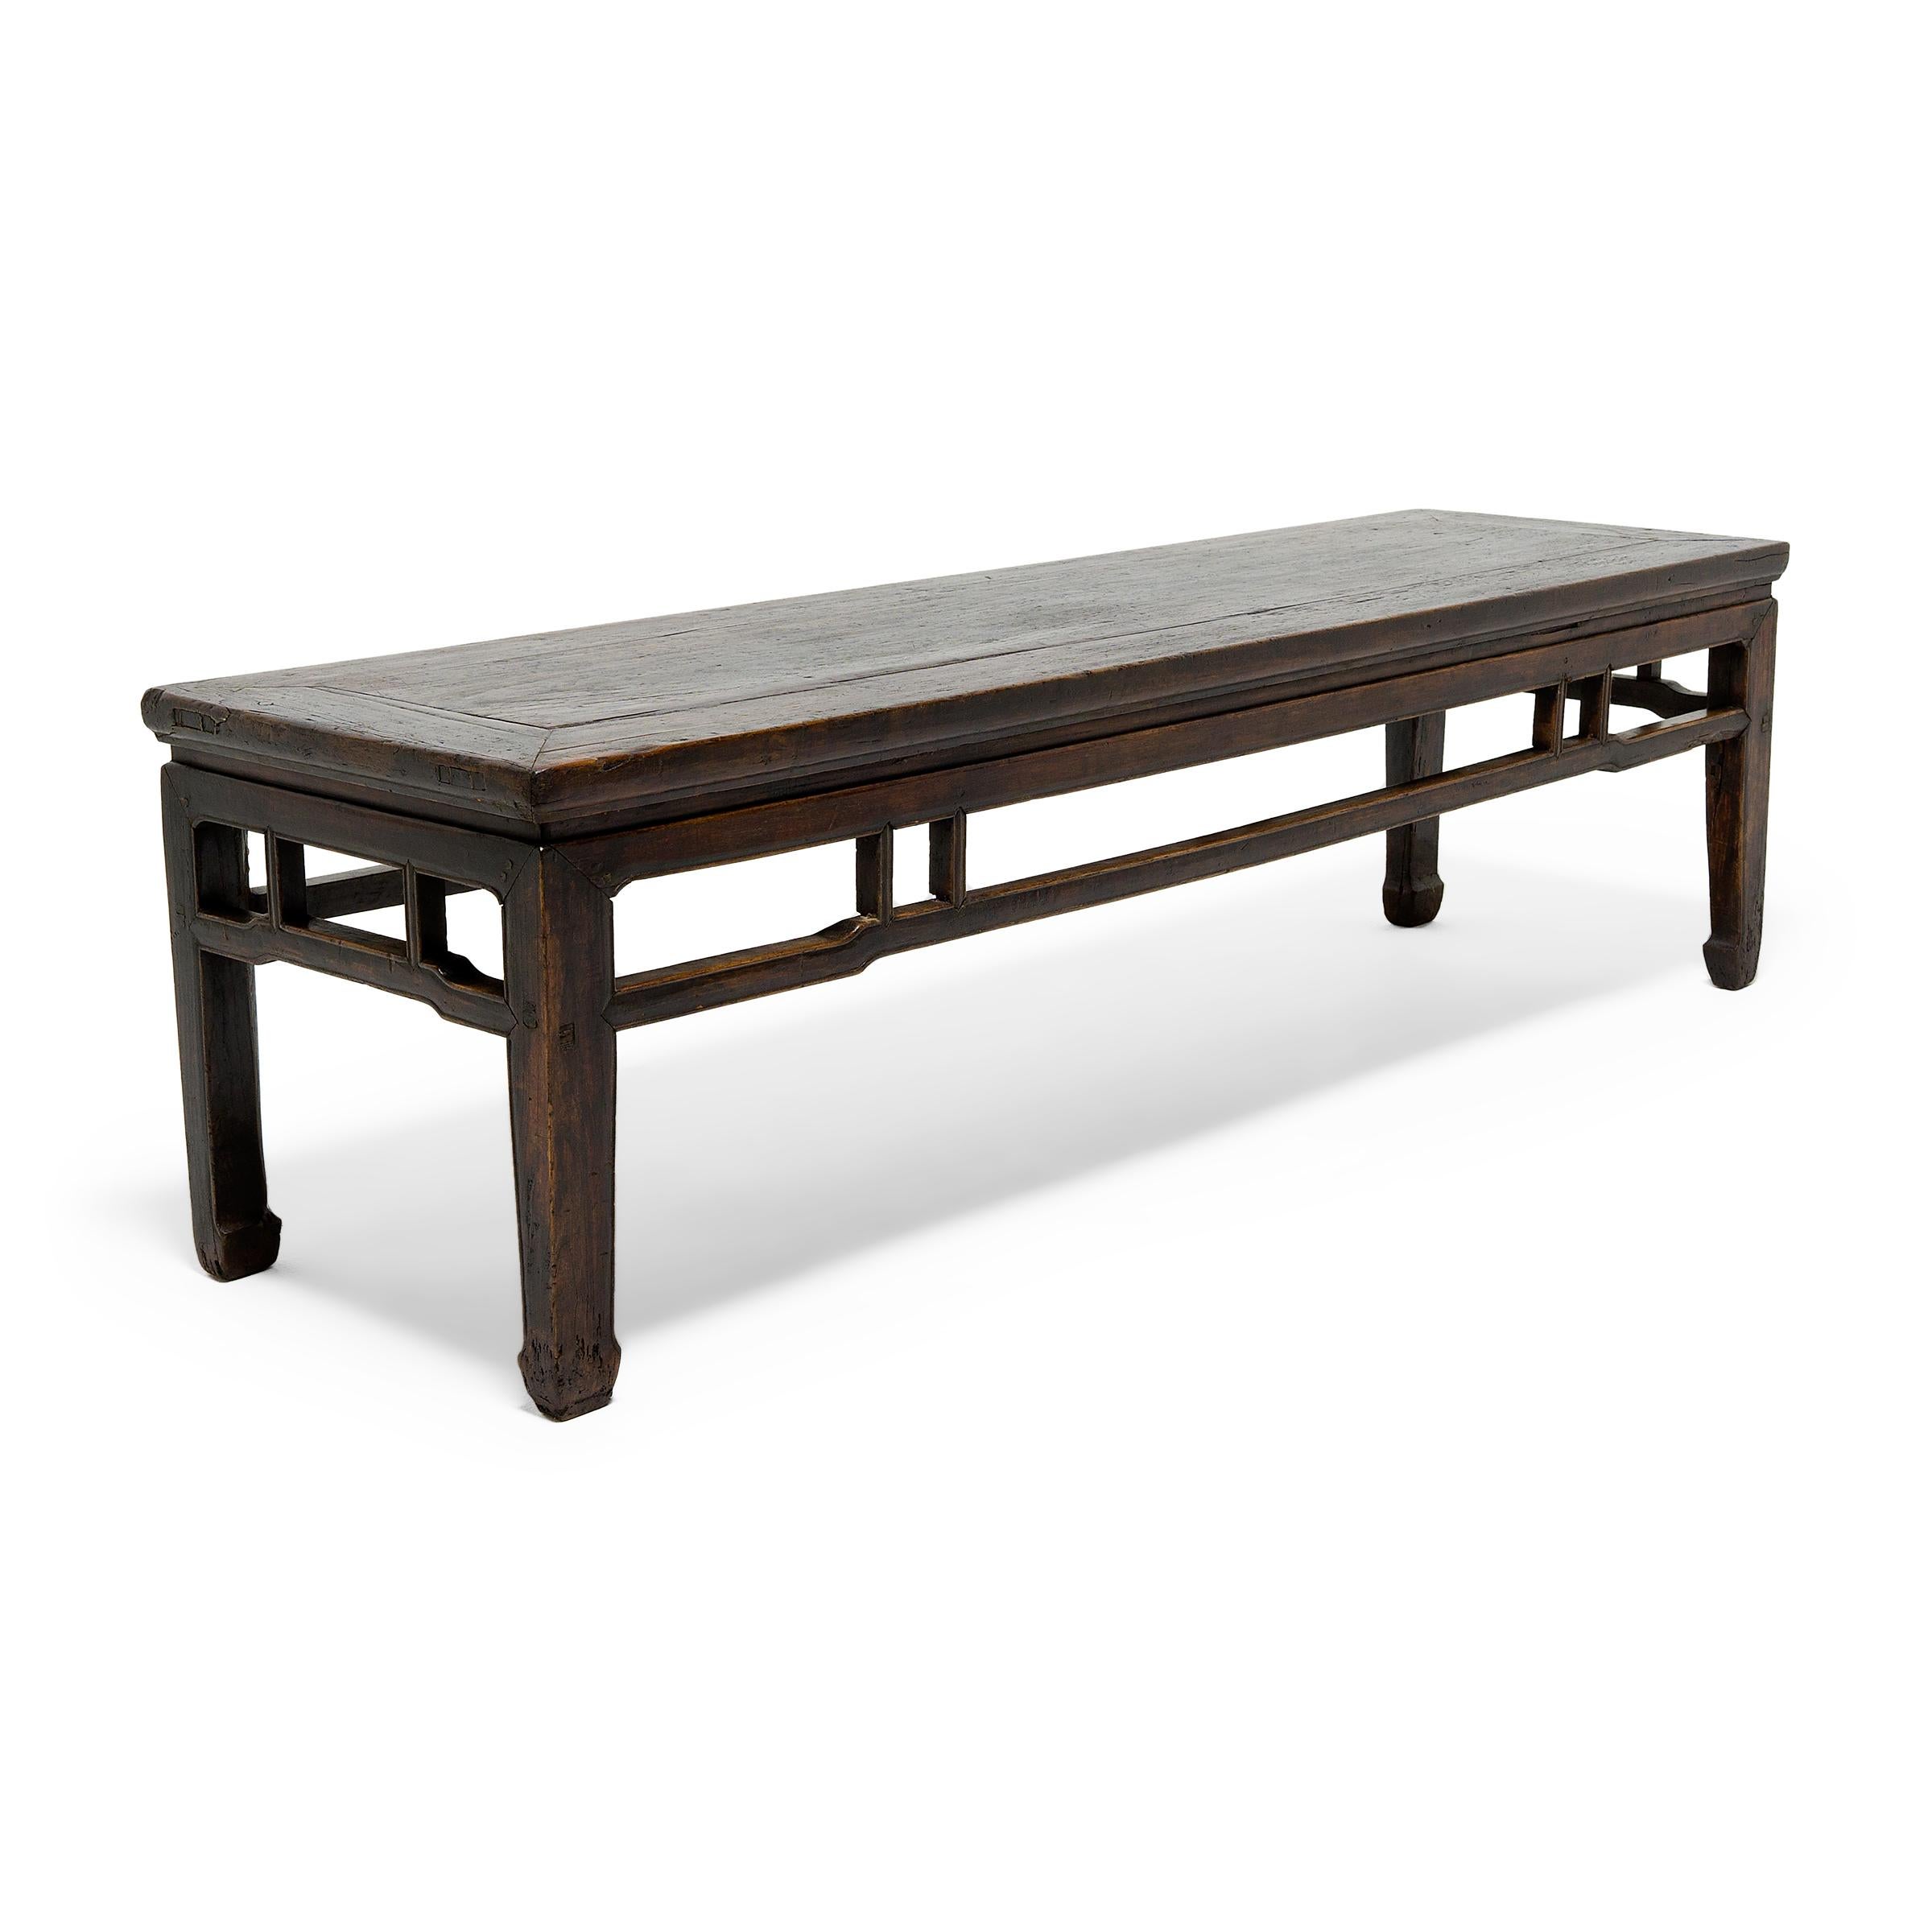 Qing Chinese Low Kang Table, circa 1800